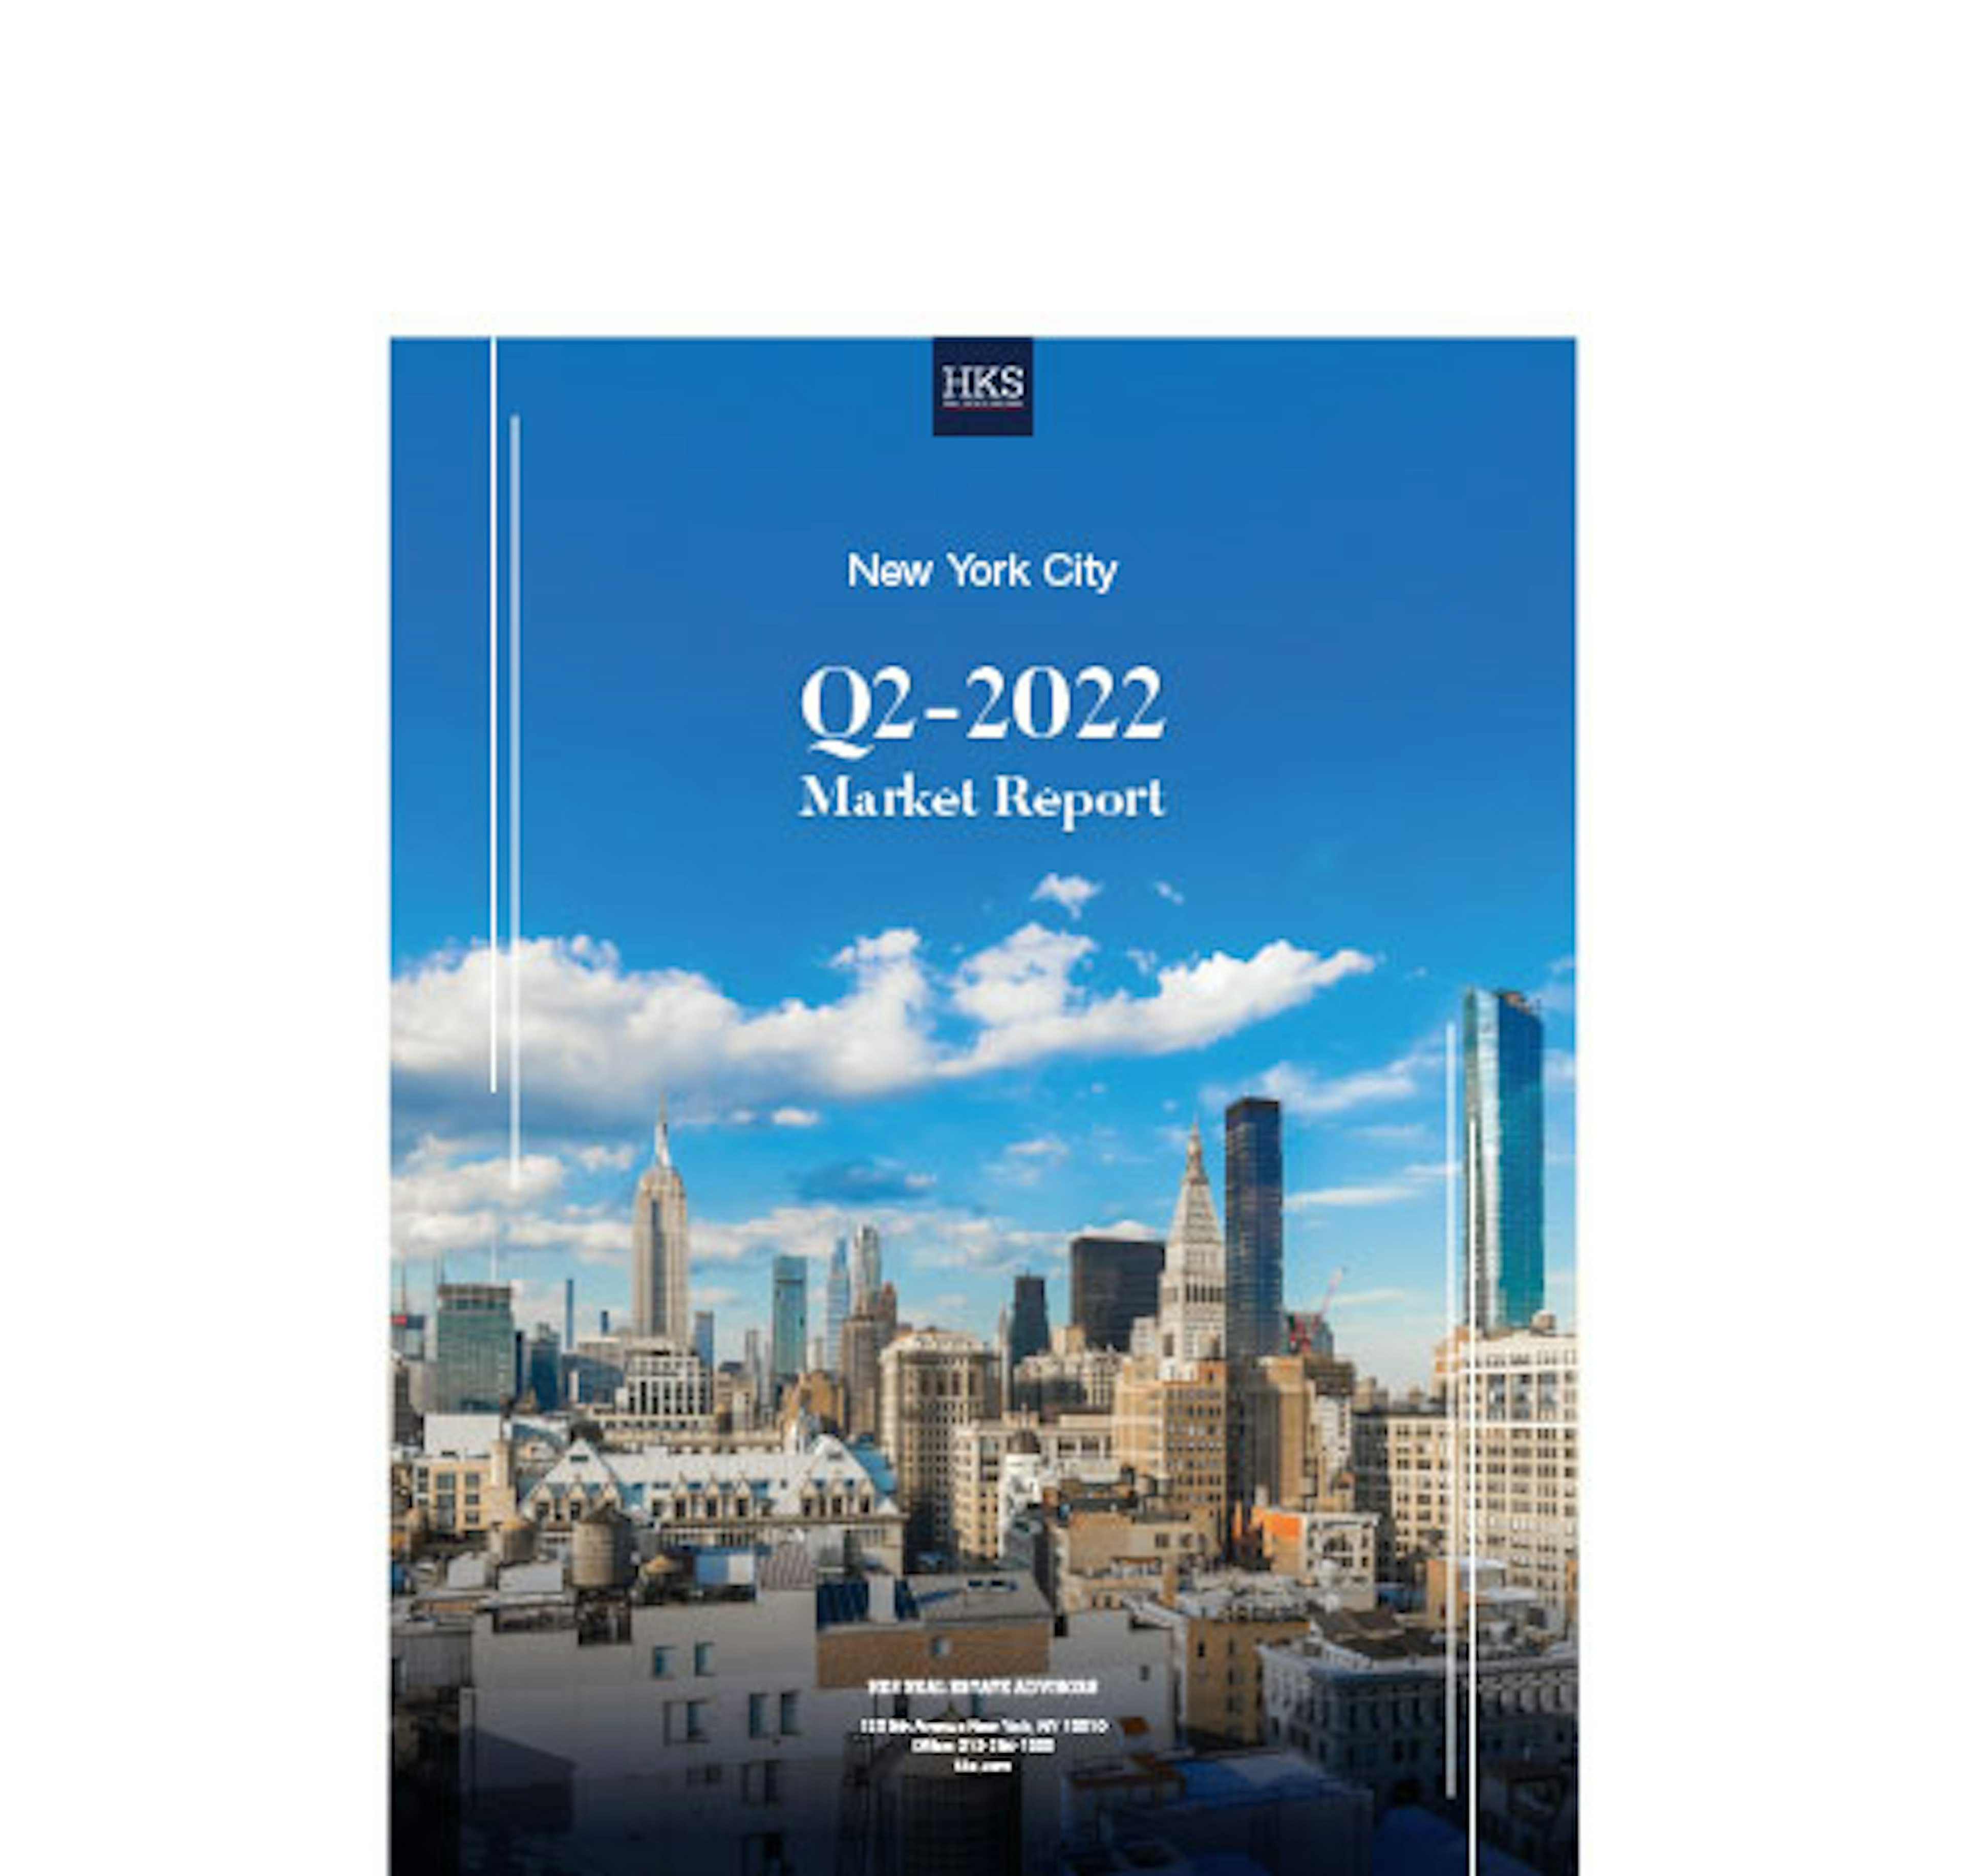 NEW YORK CITY / Q2 2022 / Market Report